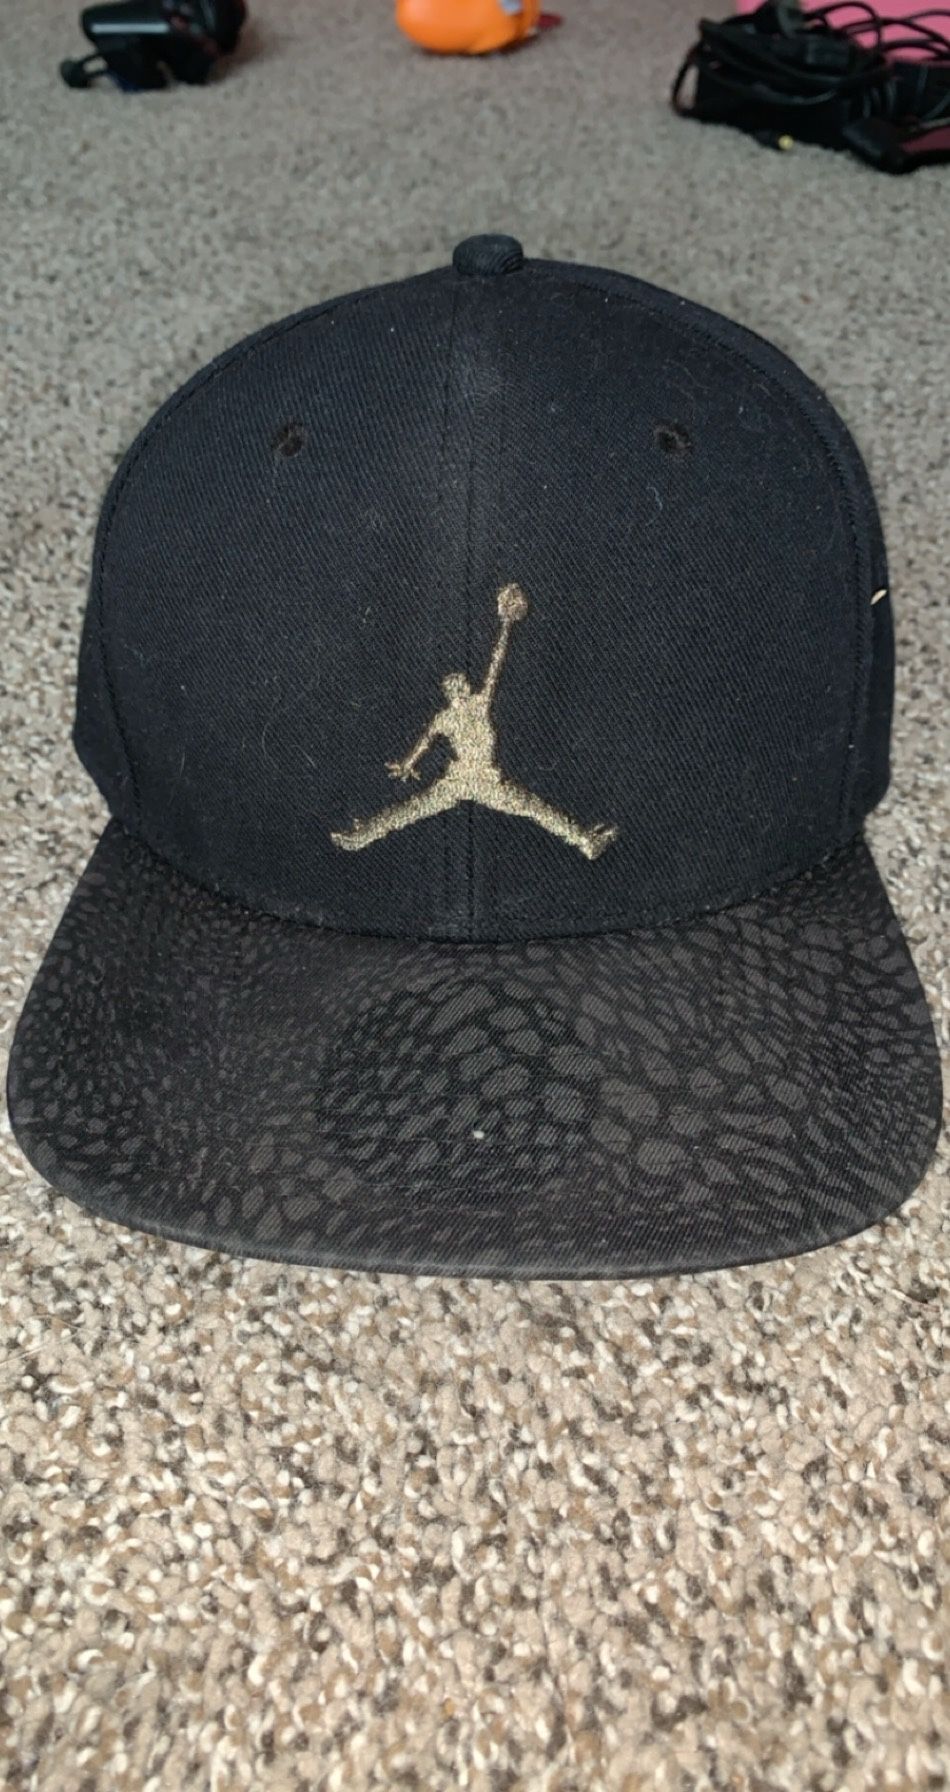 Michael Jordan Hat (Used and Abused) $5